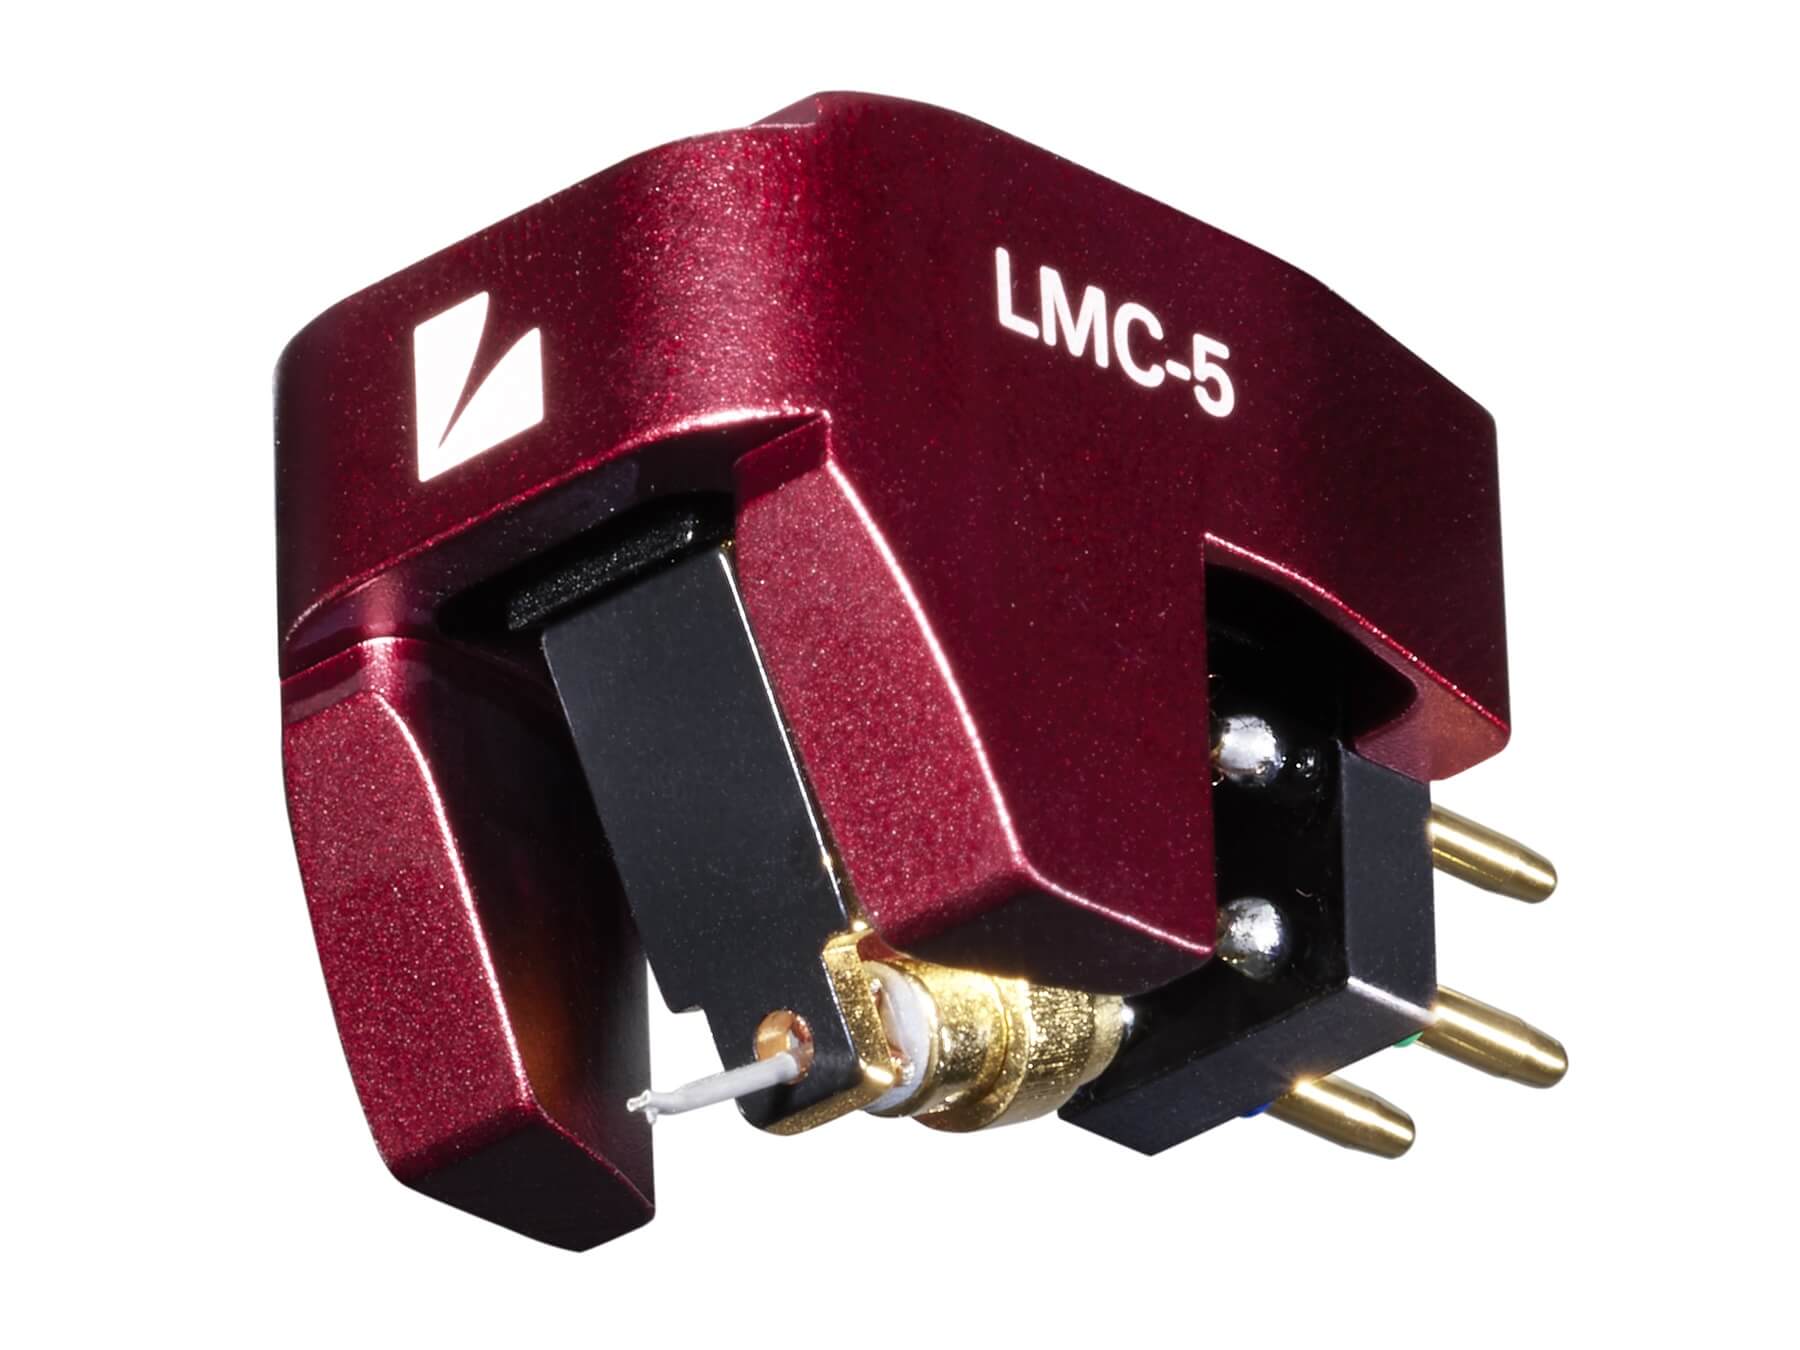 Luxman LMC-5 - Turntable Cartridge